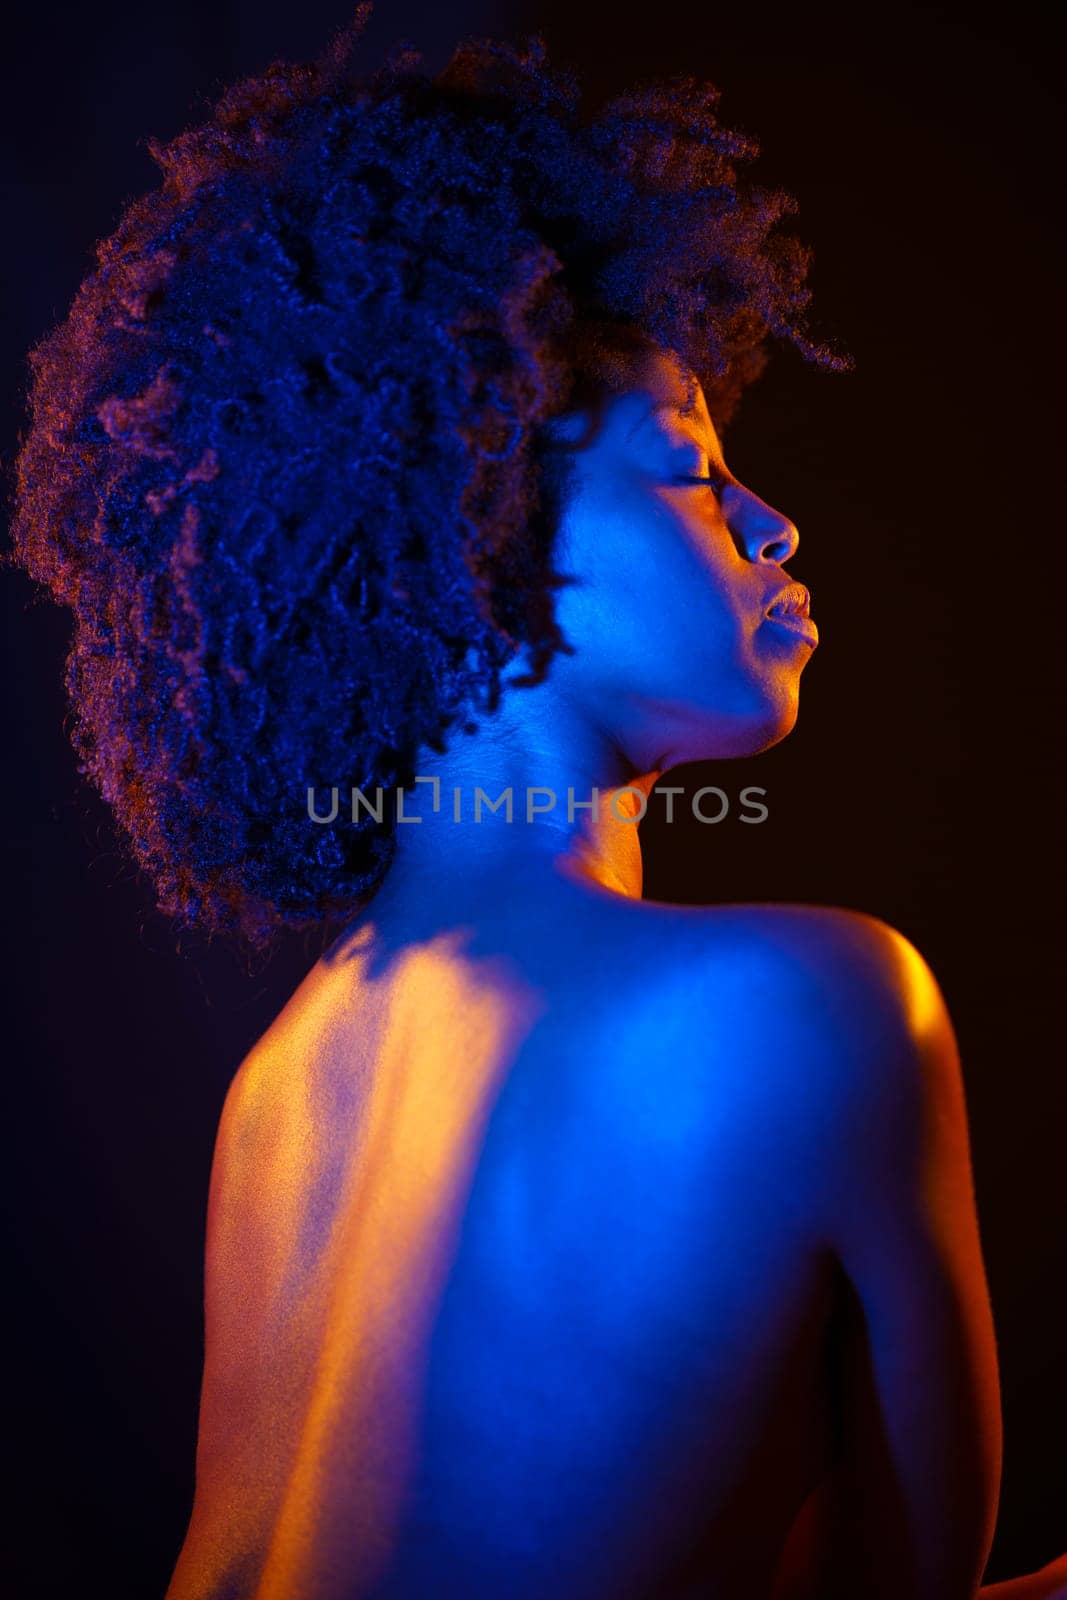 Naked black woman, afro hairstyle, under neon illumination by javiindy